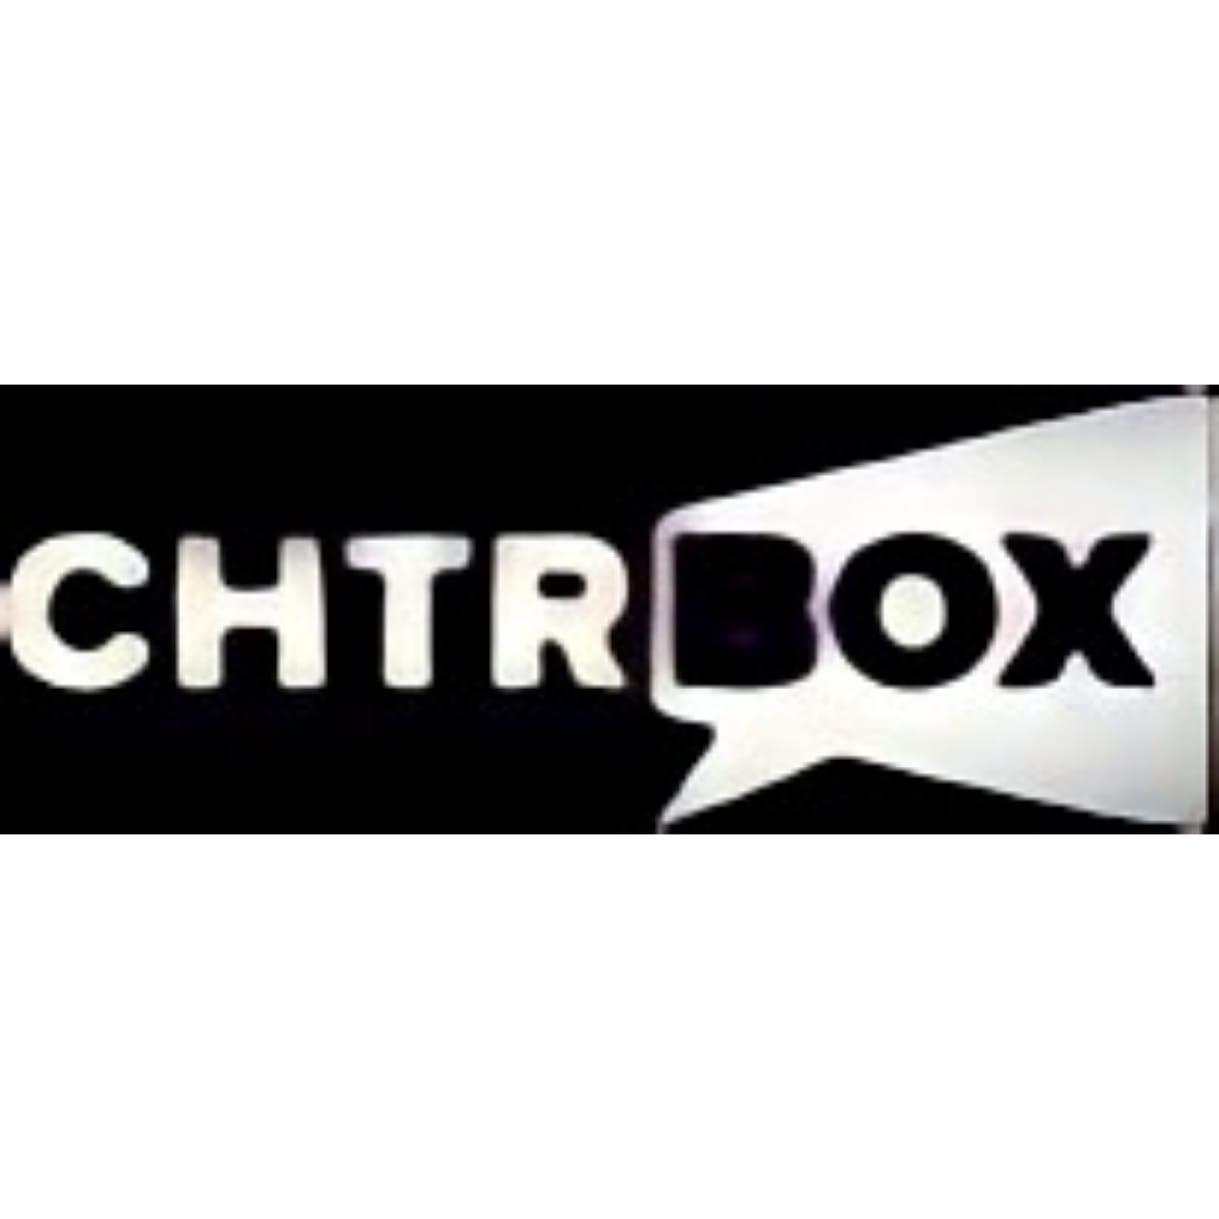 Chtrbox Influencer Marketing Company